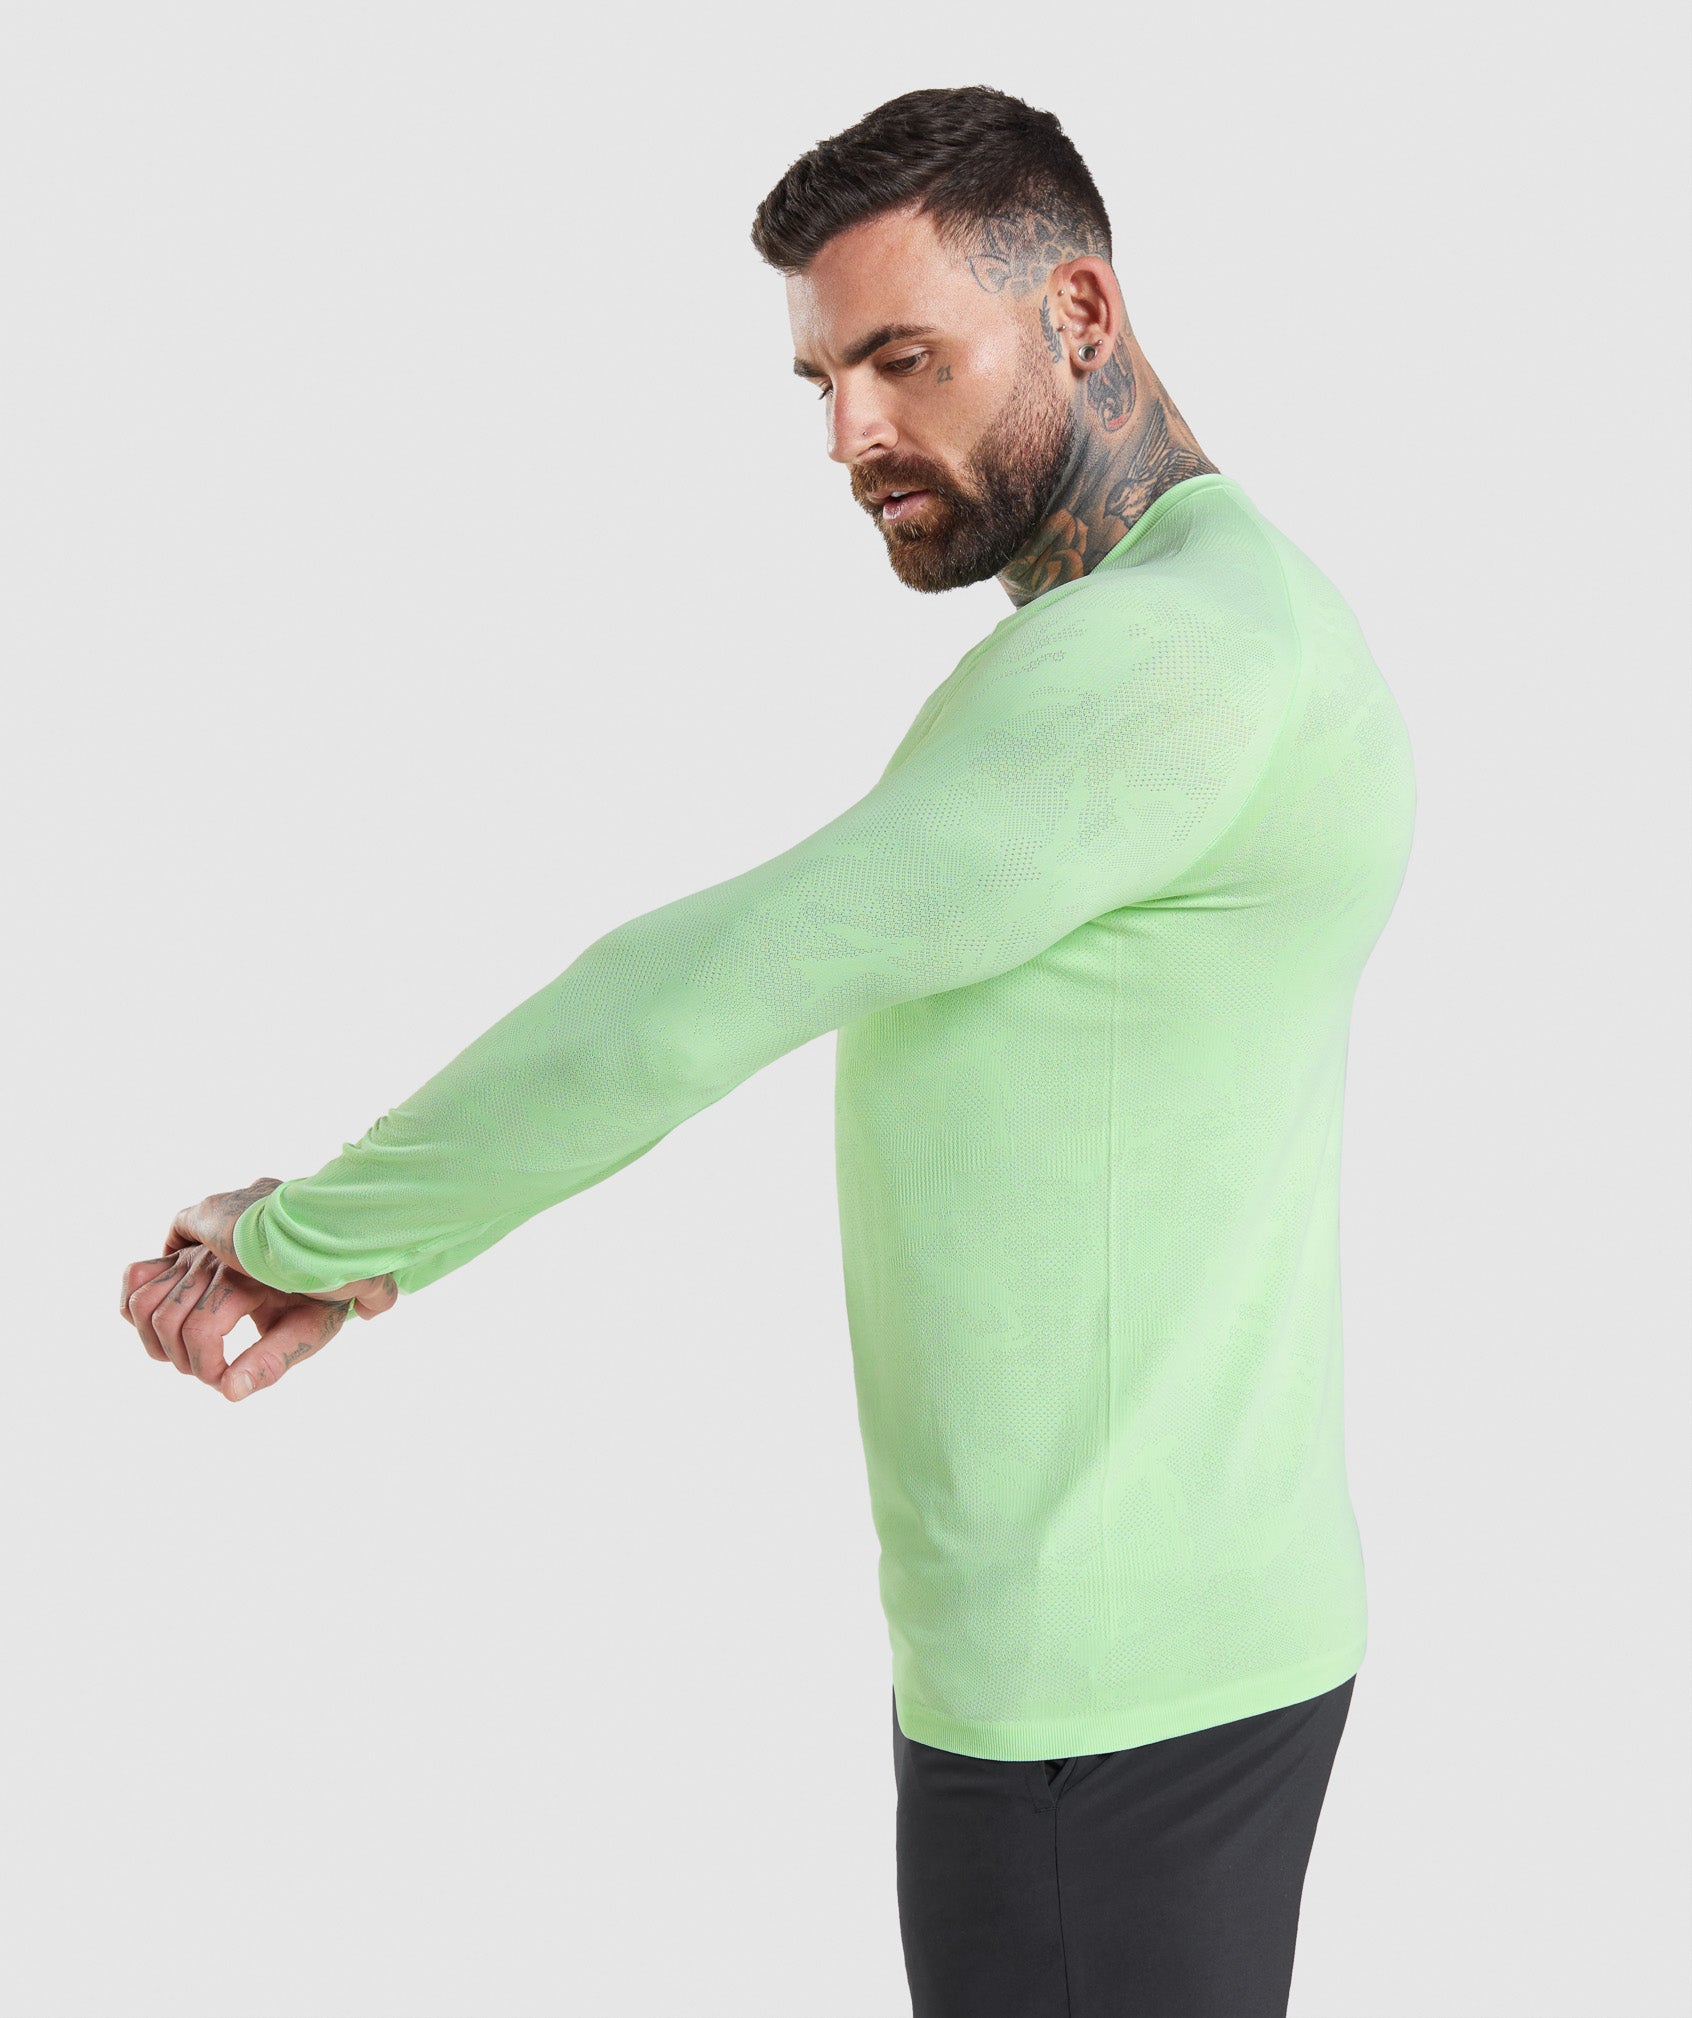 NEW Men's GYMSHARK Arrival Long Sleeve Shirt Aqua Green